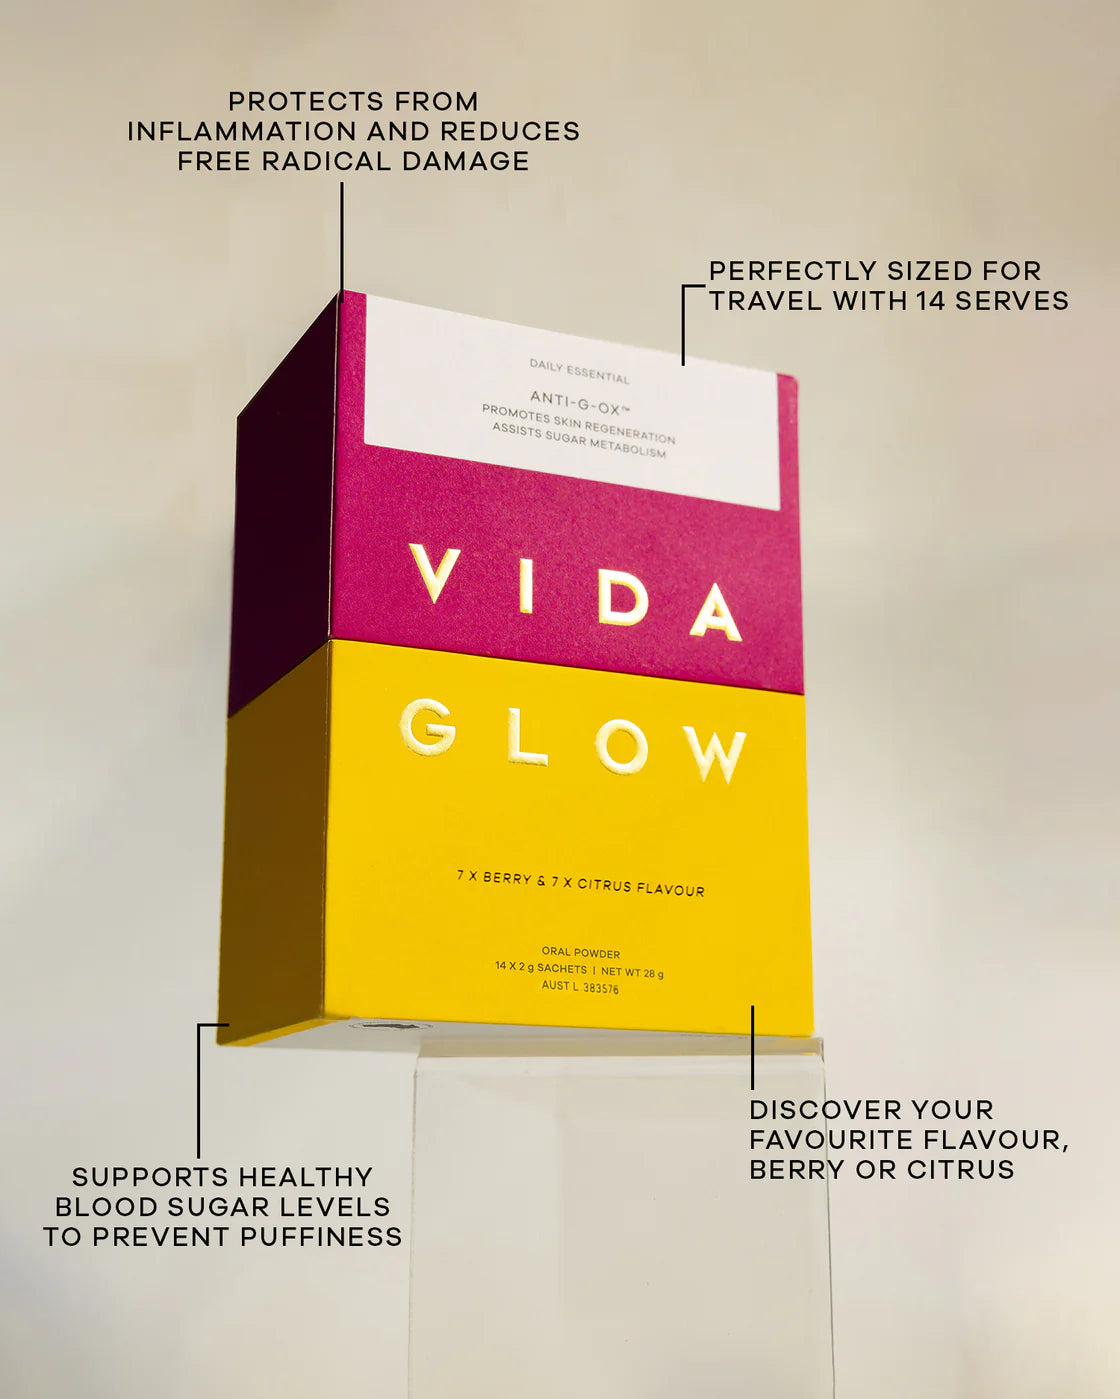 Vida Glow Anti-G-Ox Mixed Trial Pack Berry & Citrus